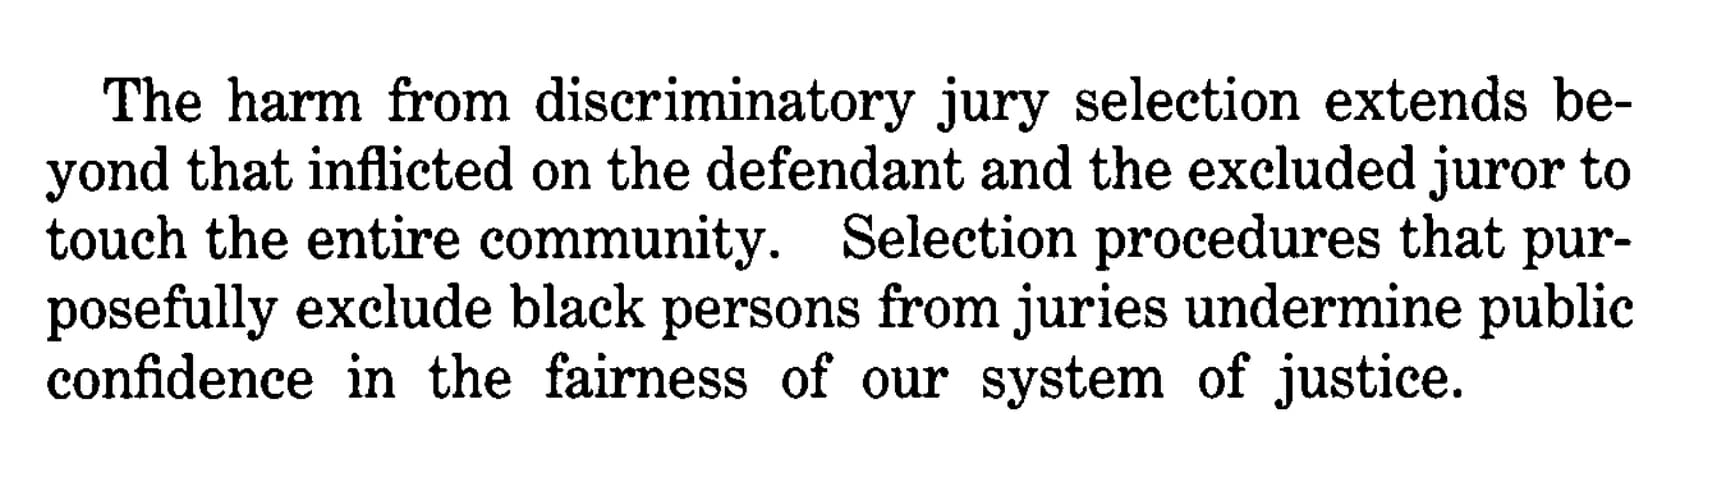 Batson v. Kentucky, 476 U.S. 79 (1985), https://www.loc.gov/item/usrep476079/.